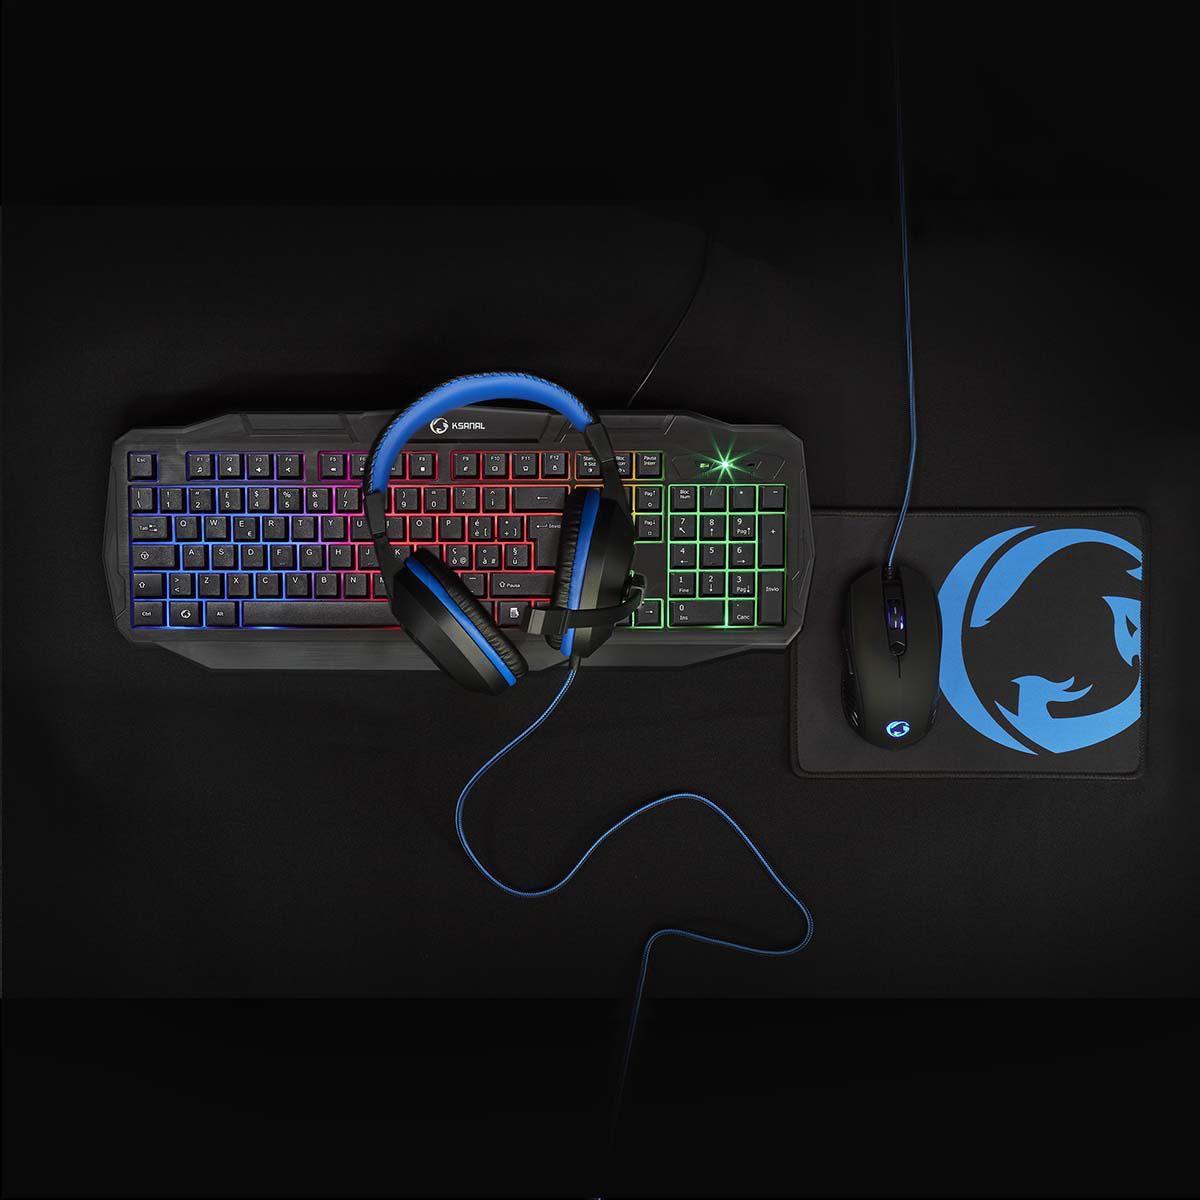 Nedis  Gaming Combo Kit | 4-in-1 | Tastatur, Headset, Maus und Mauspad | Blau / Schwarz | QWERTY | IT Layout 